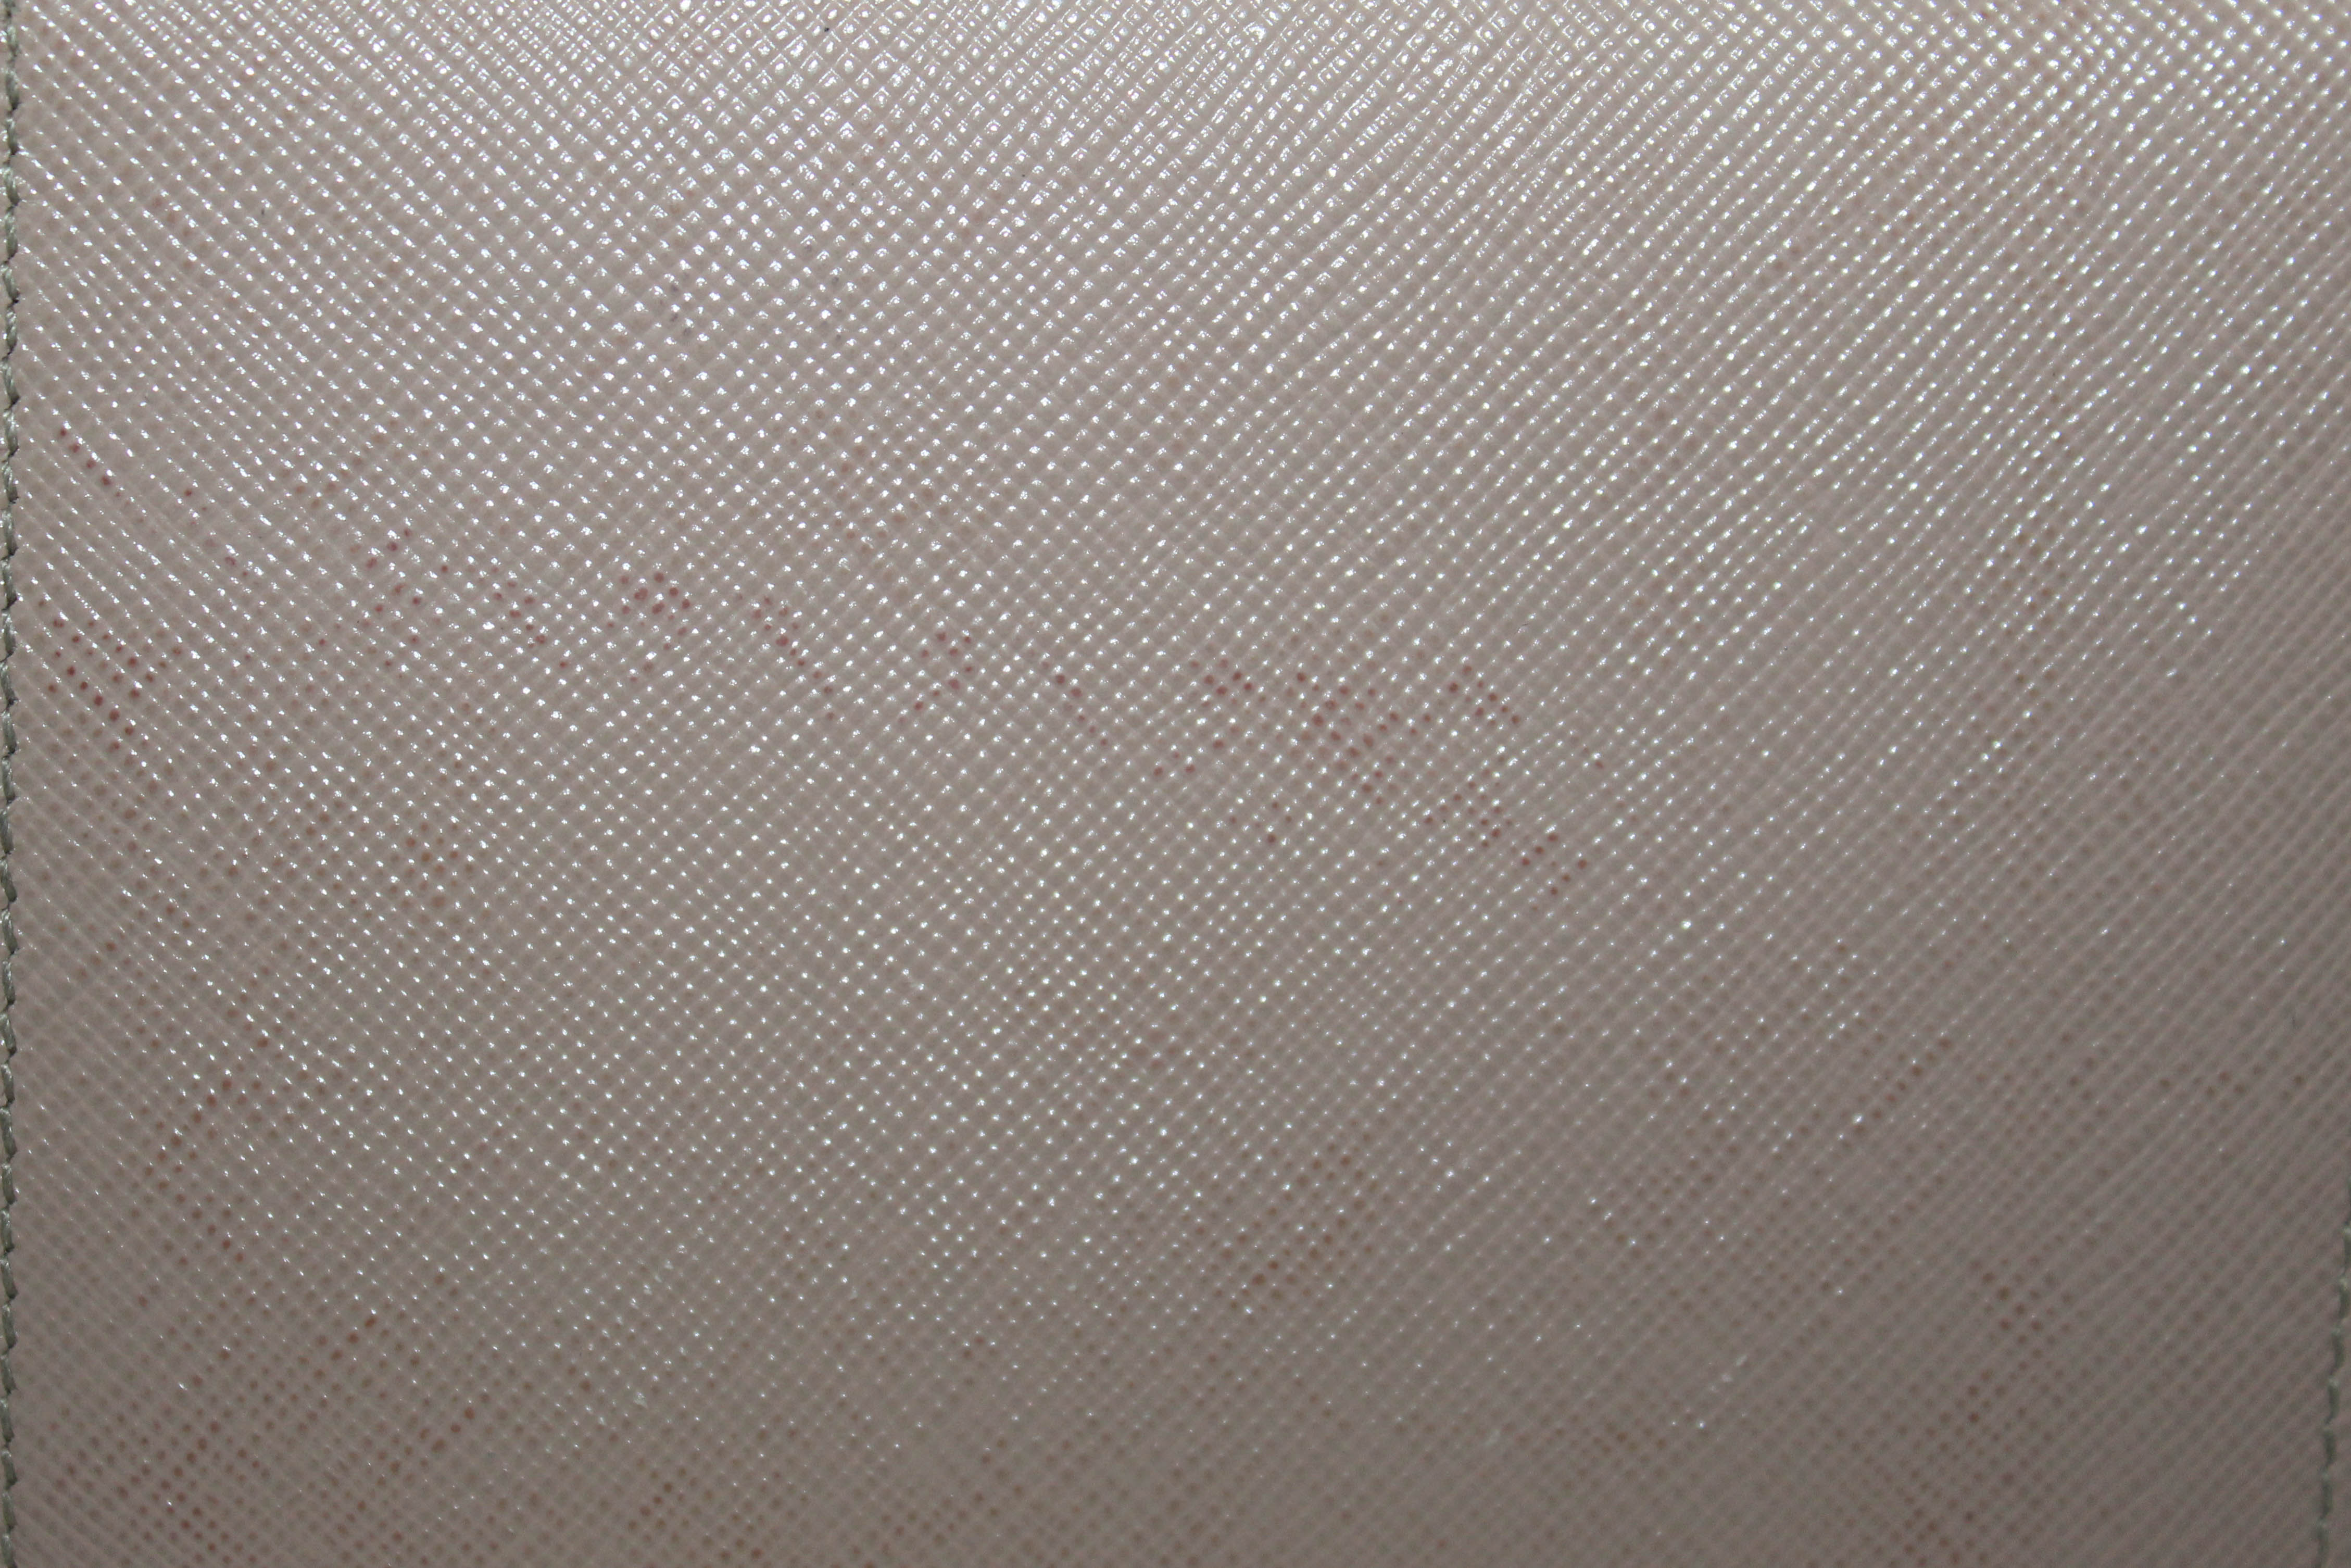 Authentic Prada Beige Saffiano Leather Tri-Fold Wallet